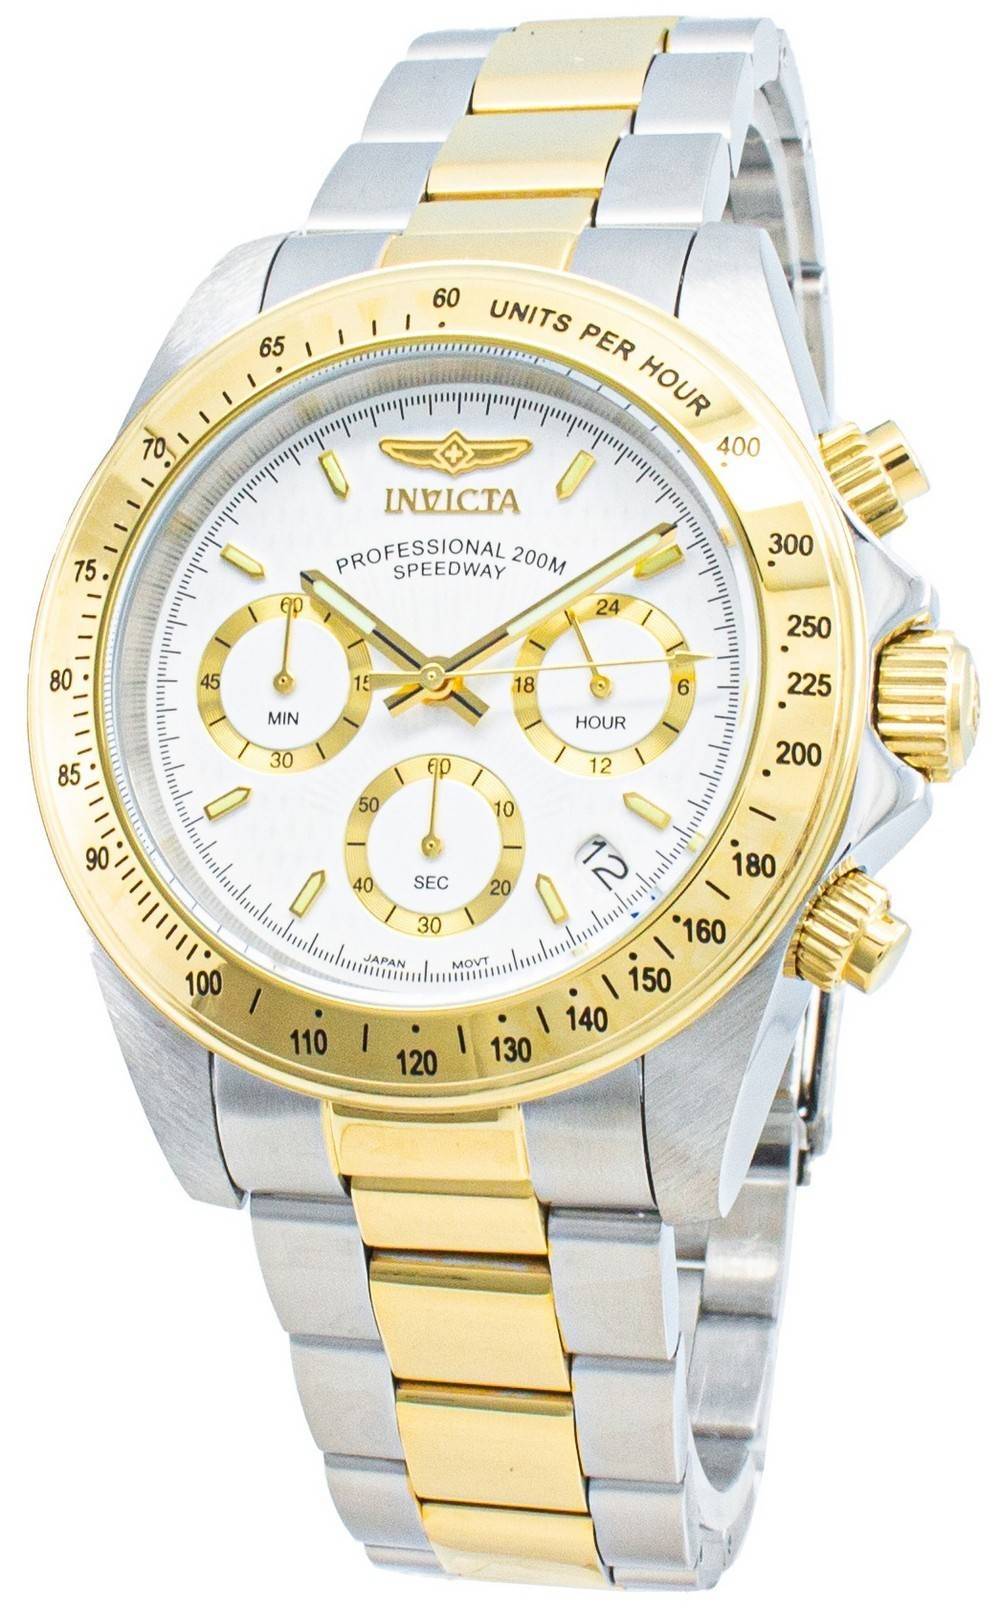 Invicta Watches | Invicta Diver & Automatic Watches for Men & Women